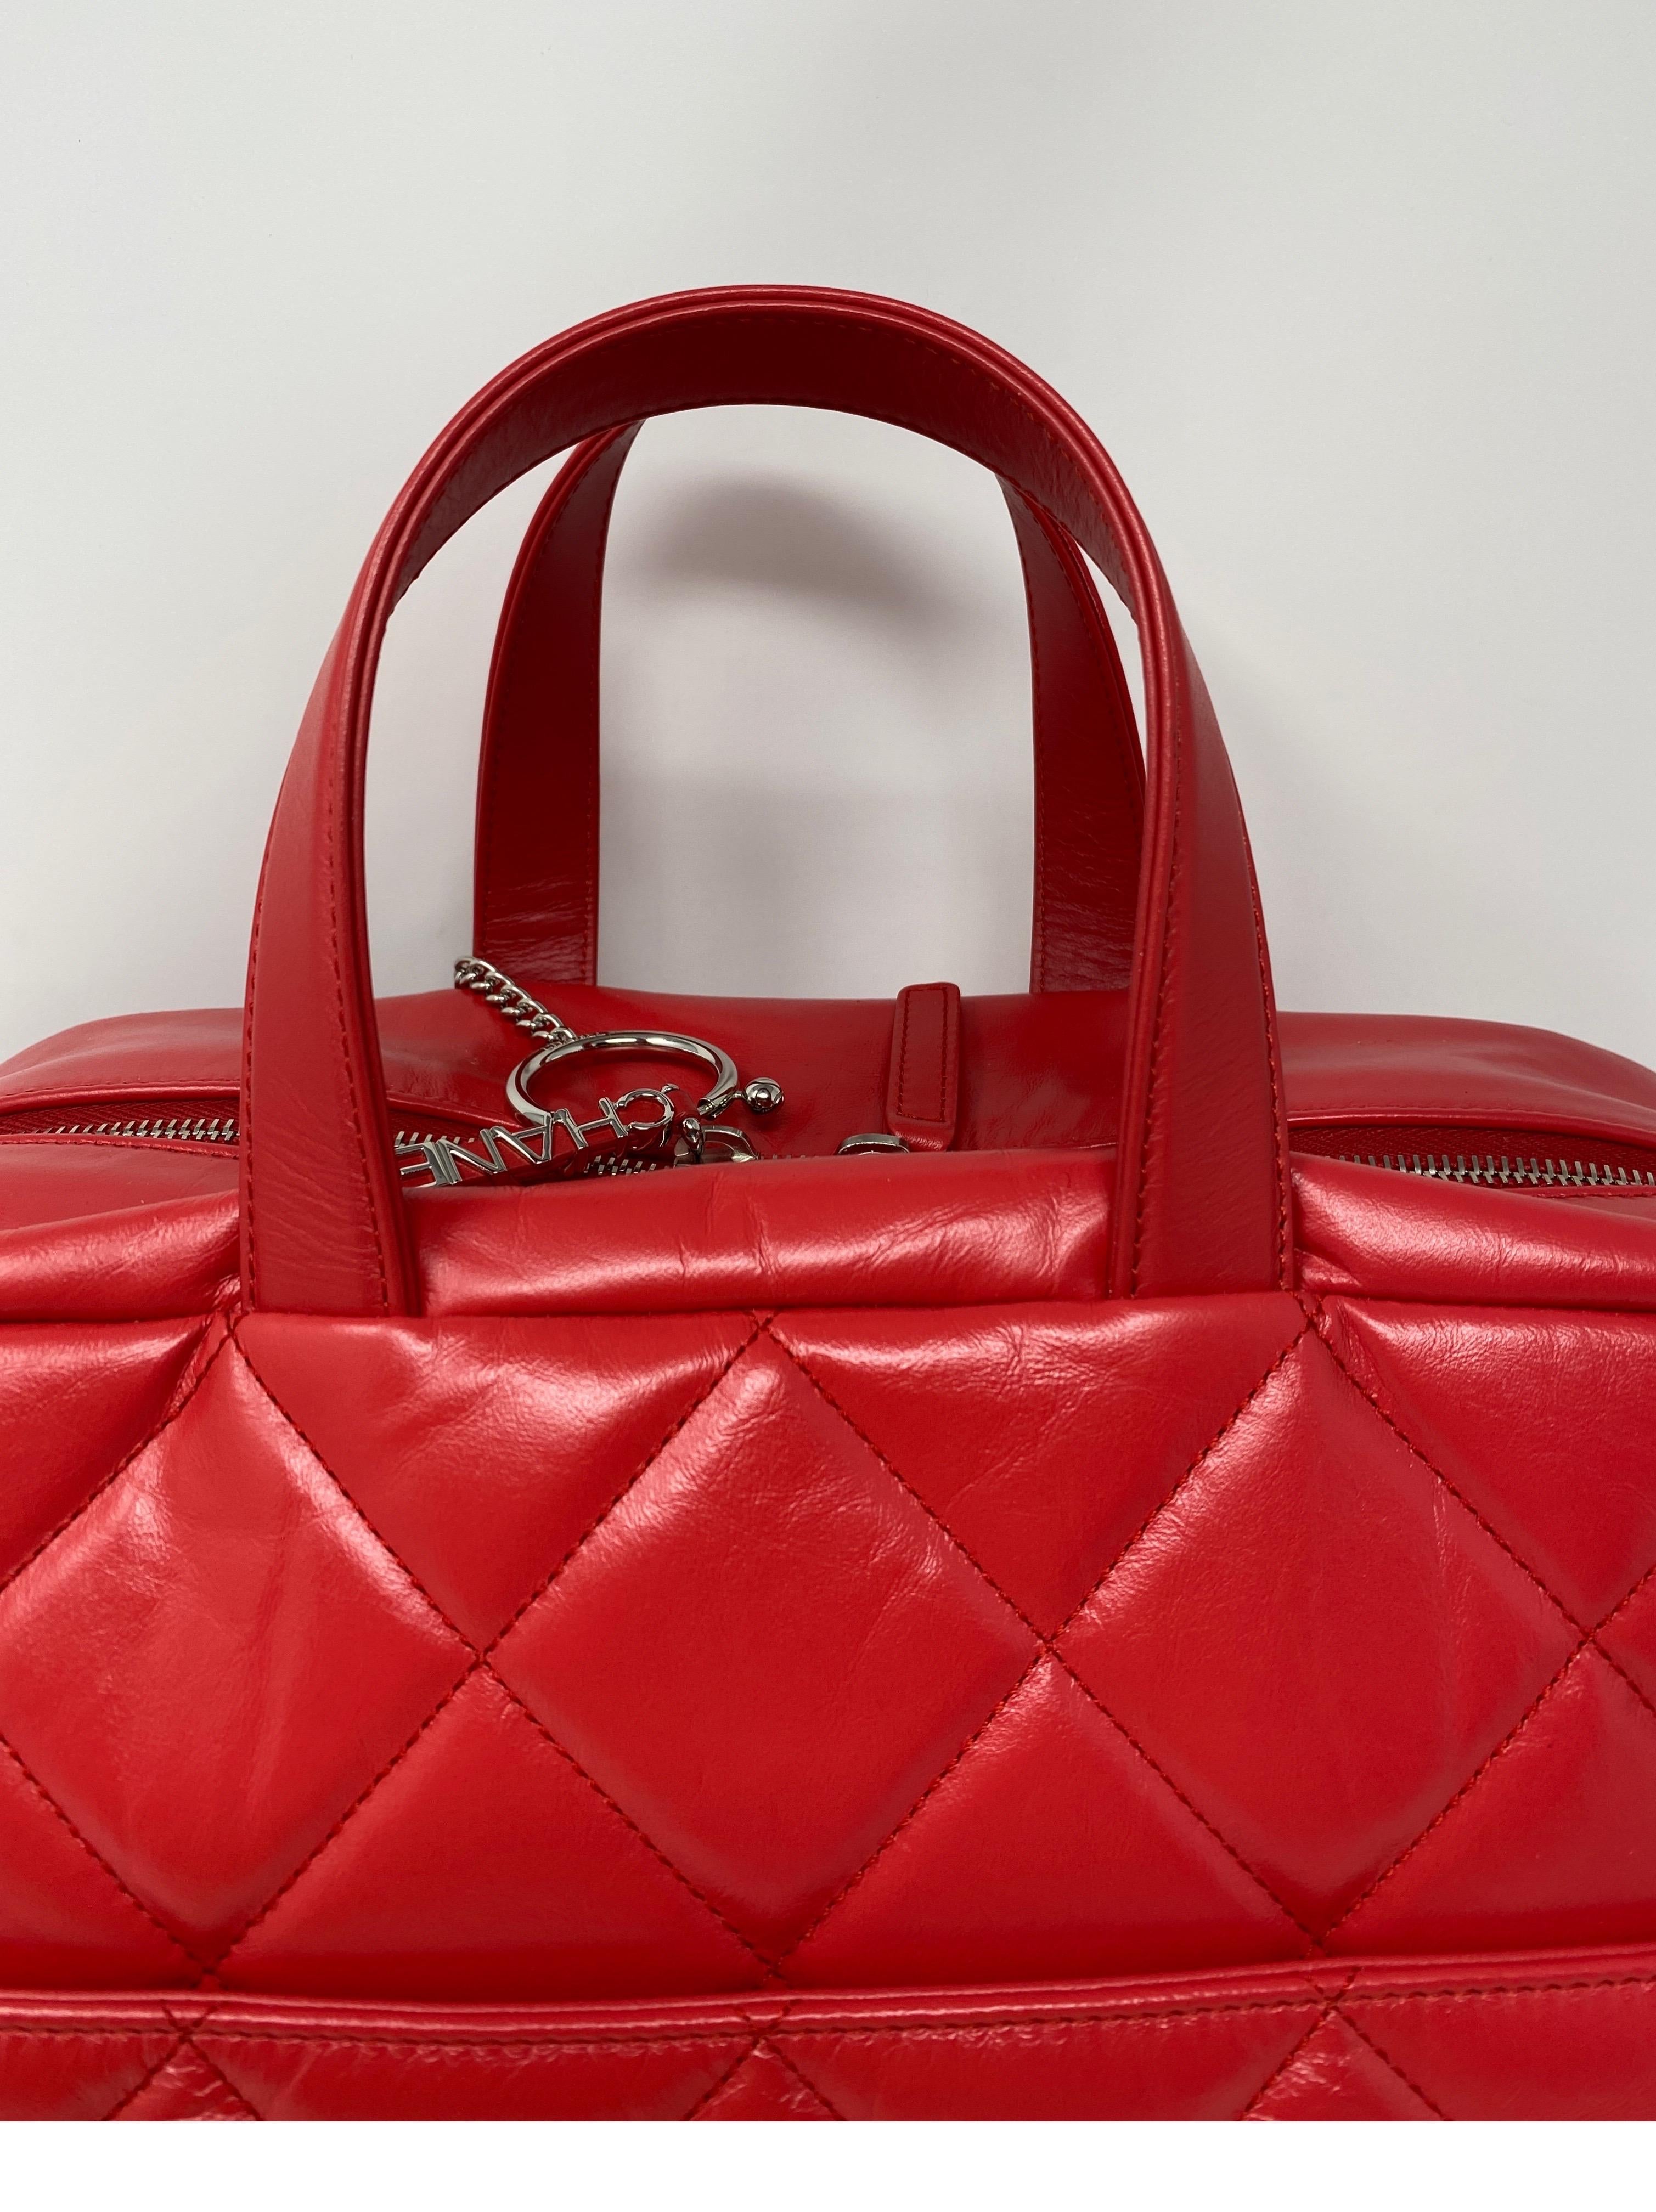 Chanel Large Red Bowler Bag  7